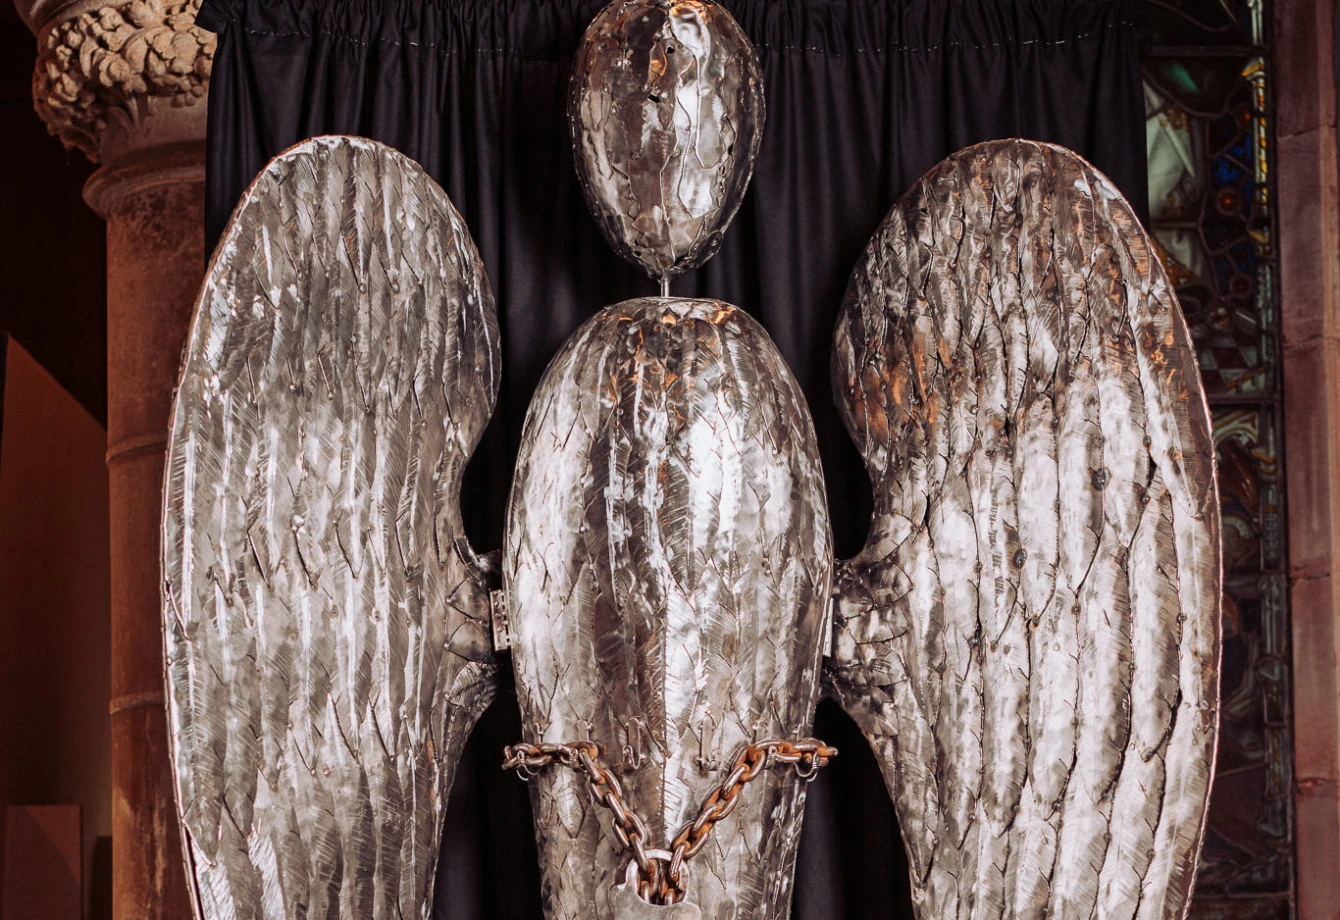 Prisoners unlock their talents to create Angel sculpture